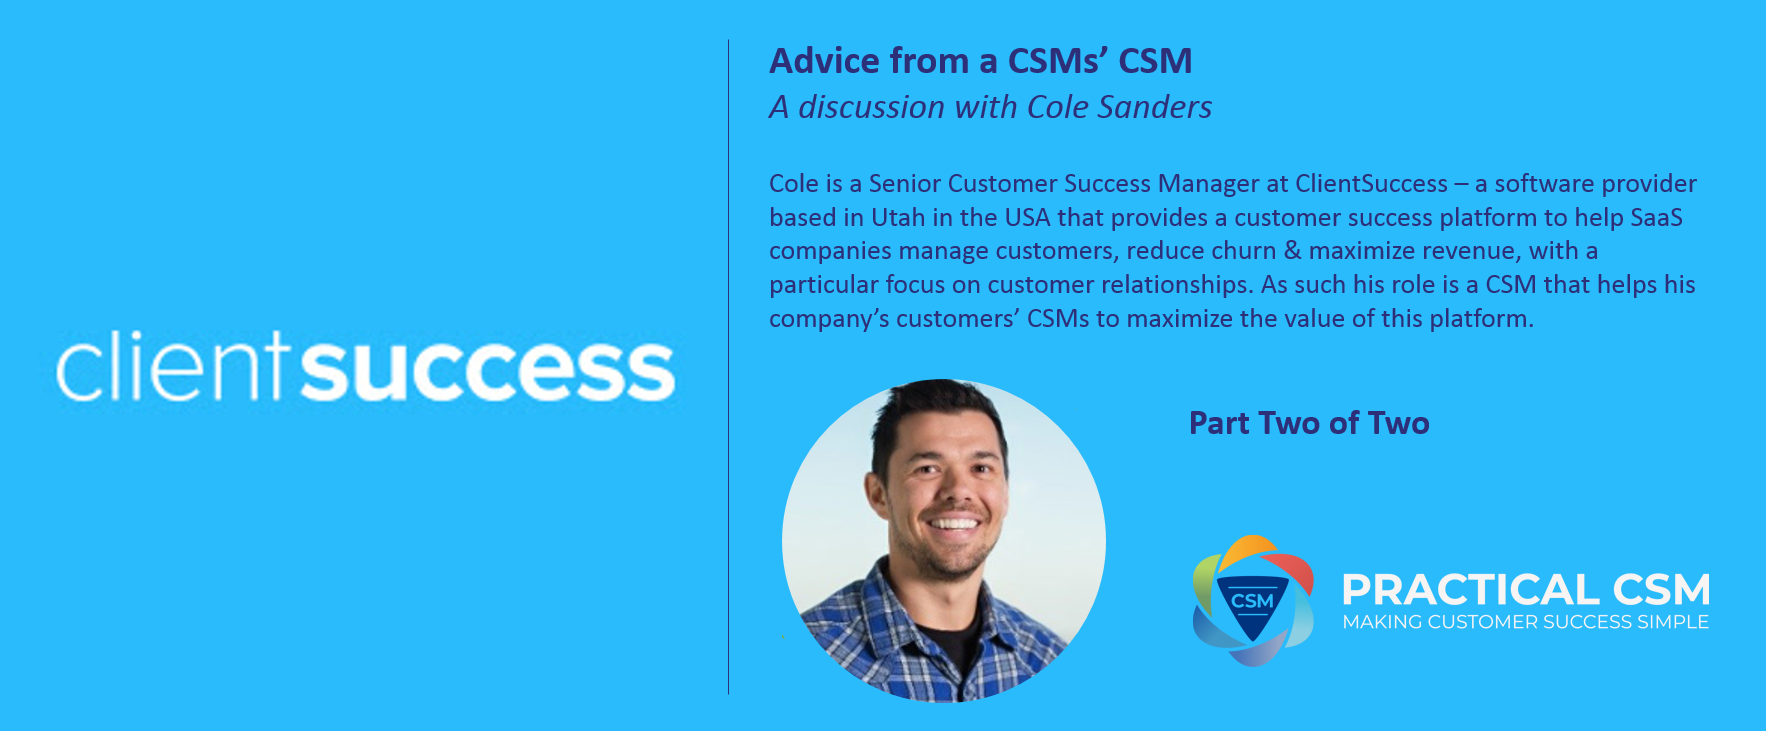 Advice from a CSM's CSM - Part 2 (Audio)- Practical CSM